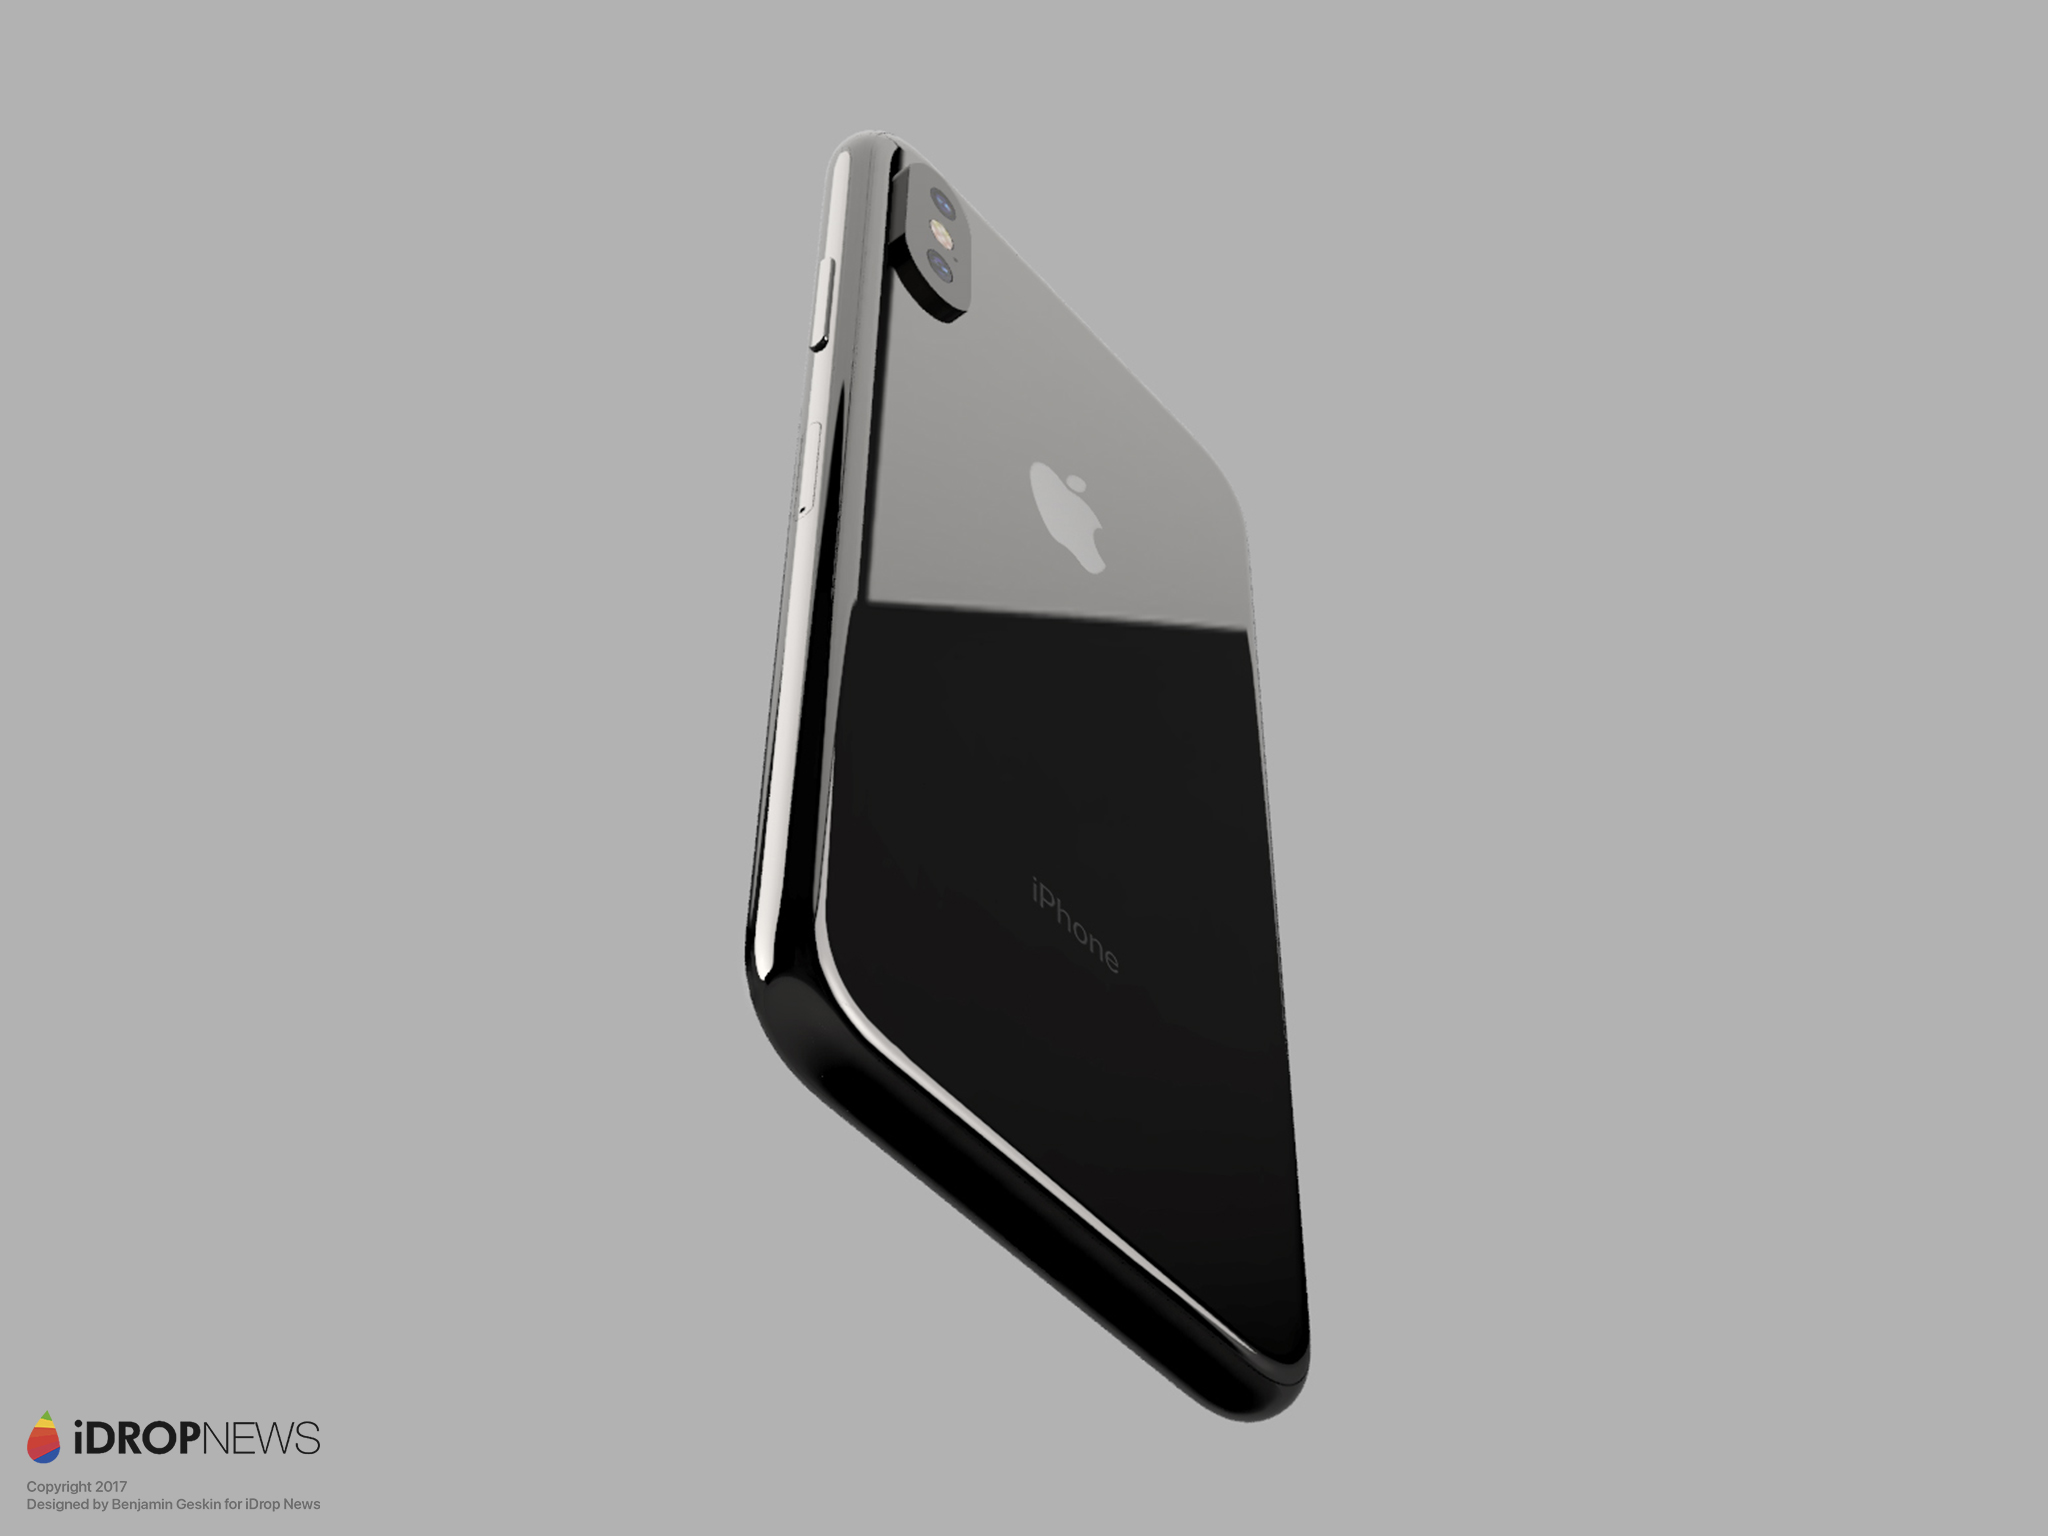 iPhone X iOS 11 Concept Image